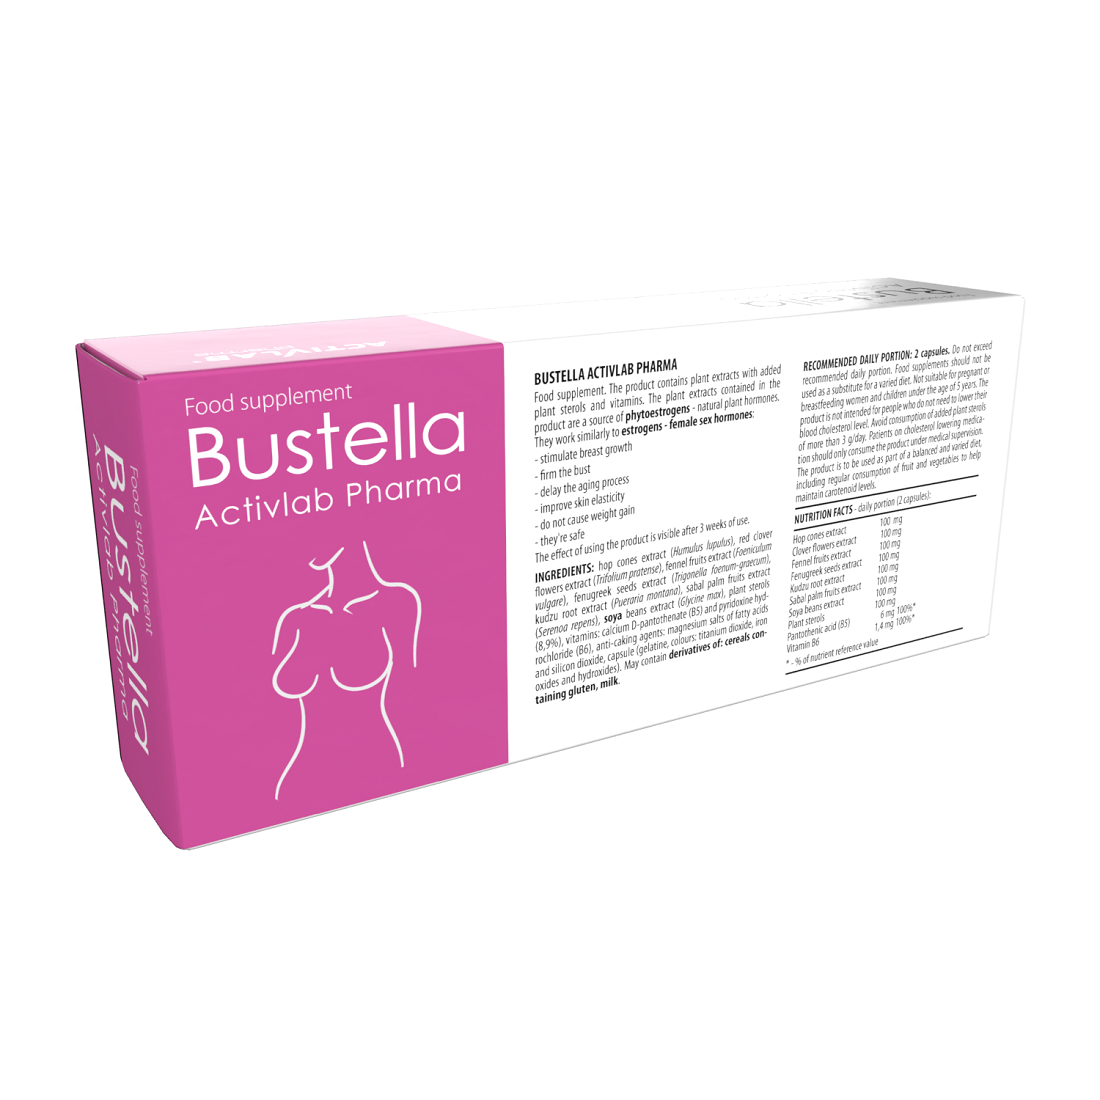 Bustella - เว็บไซต์ของผู้ผลิต - ซื้อที่ไหน - ขาย - lazada - Thailand